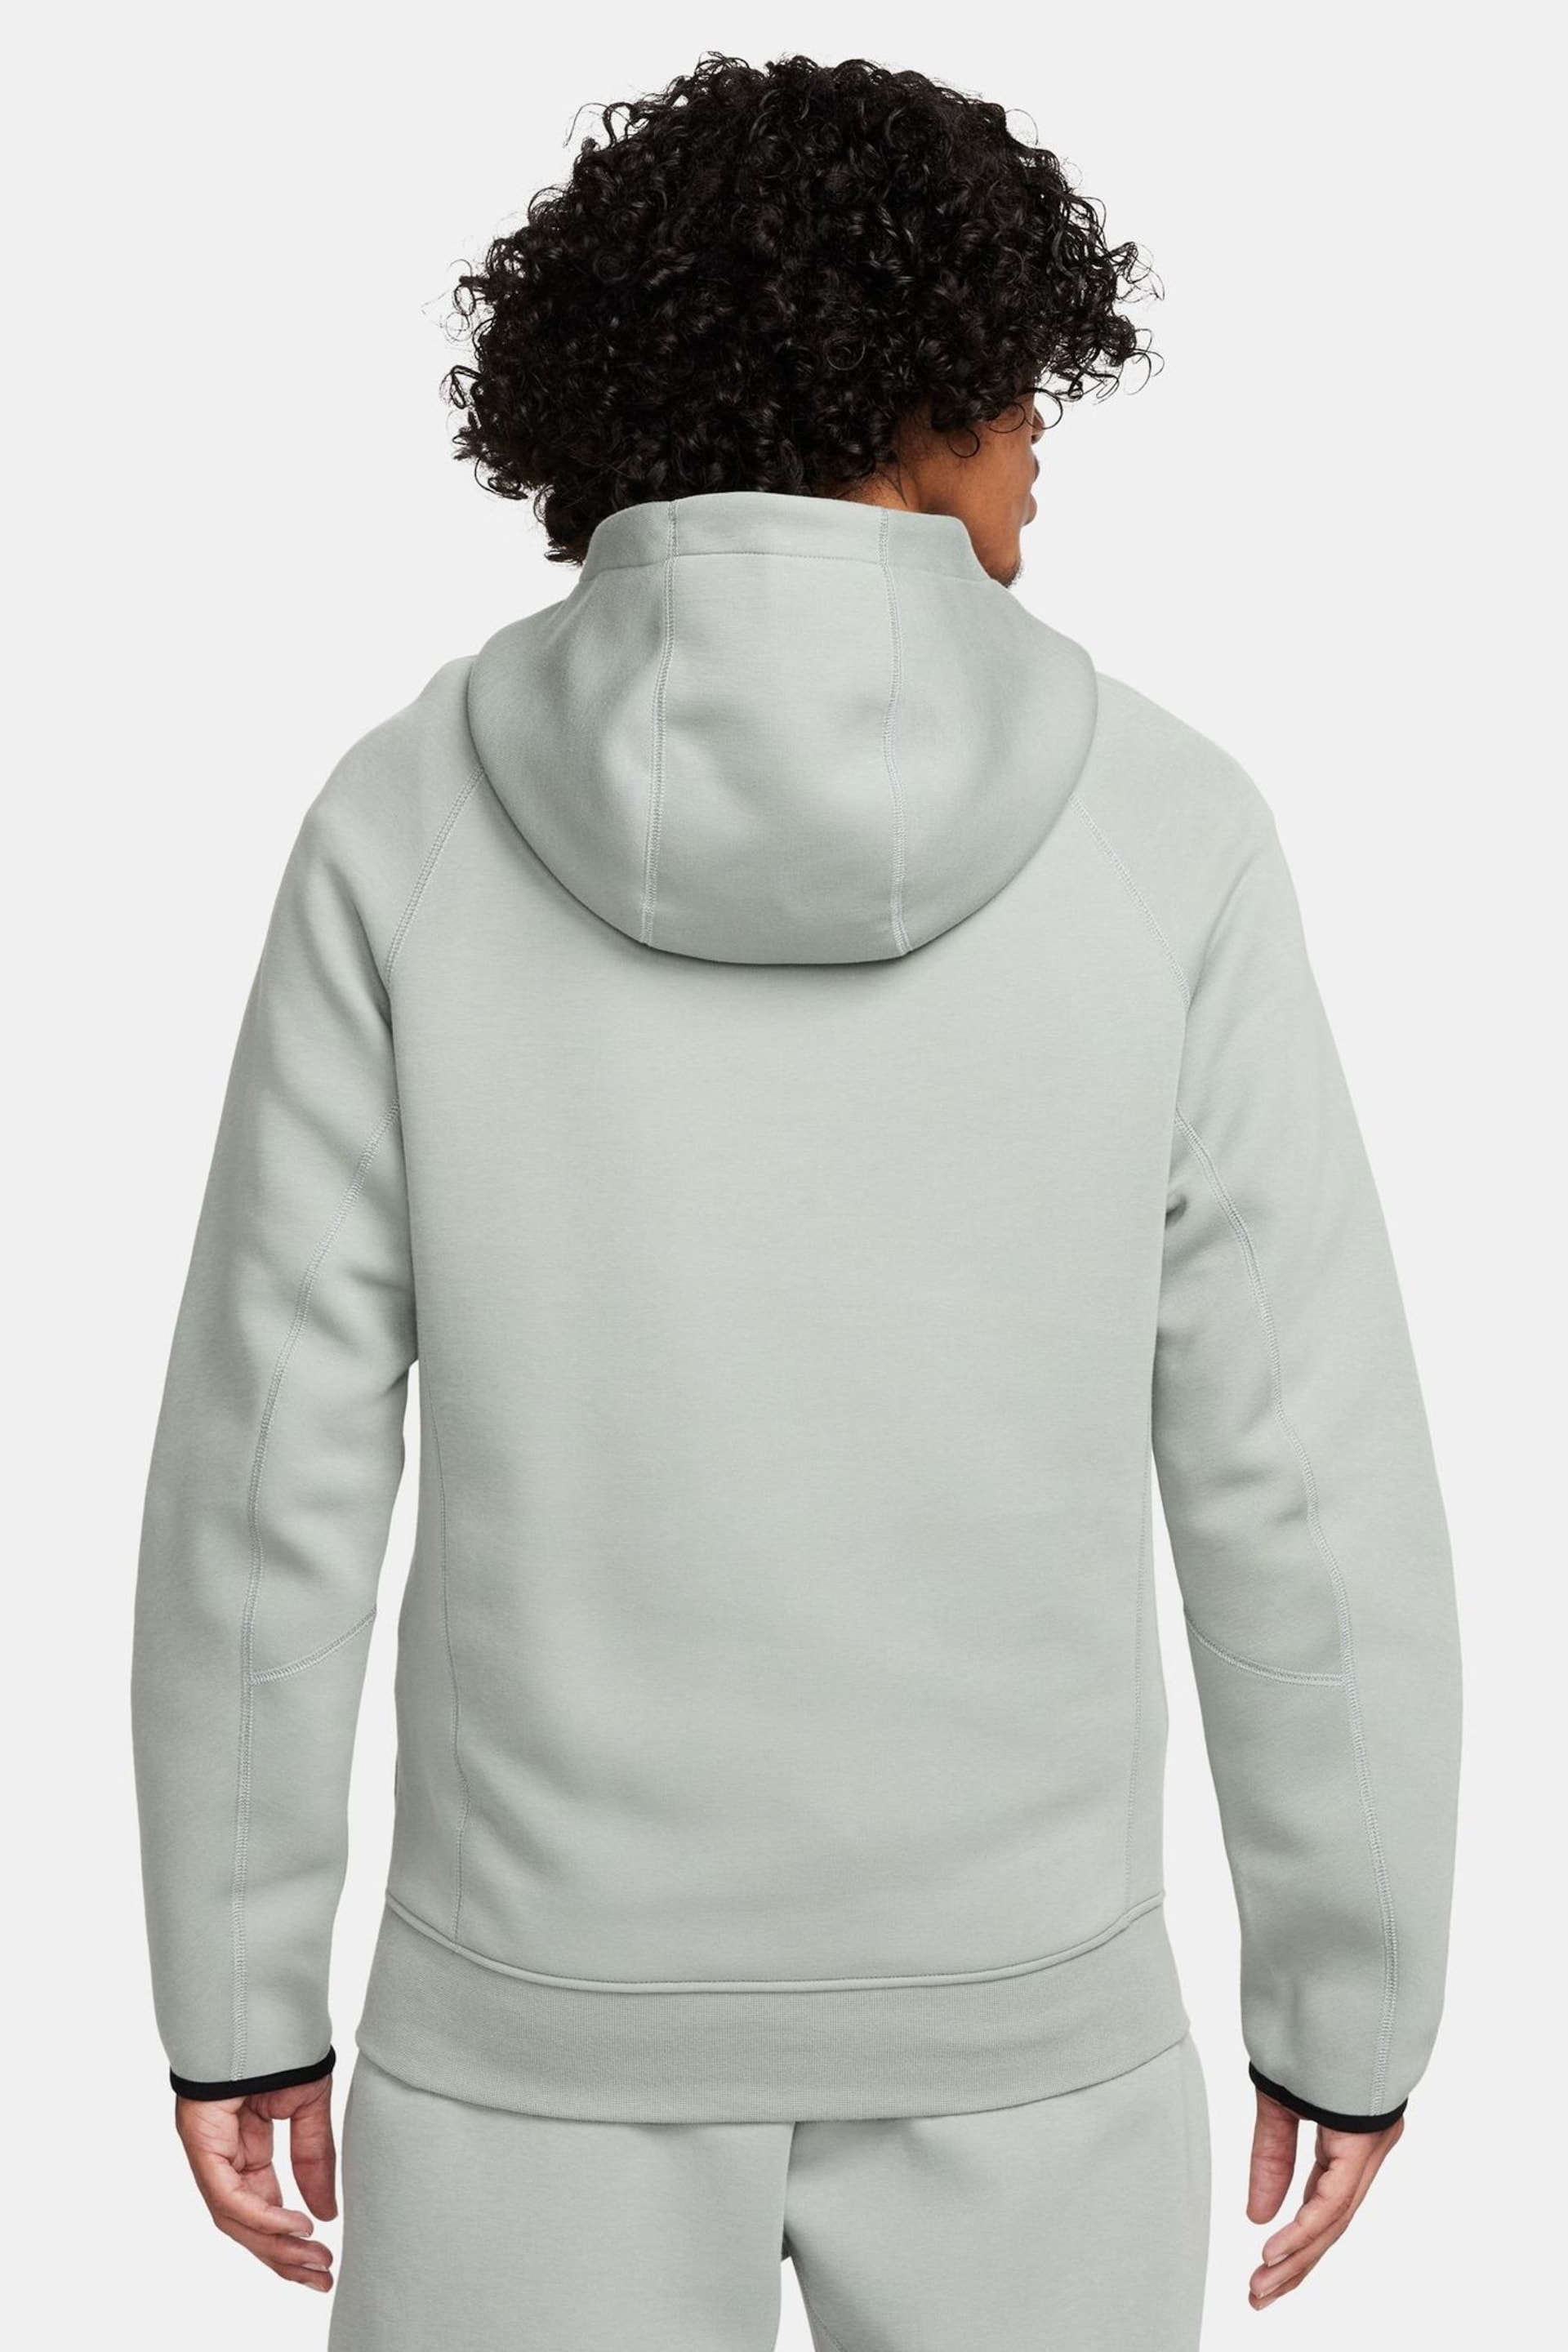 Nike Green Tech Fleece Pullover Hoodie - Image 2 of 10